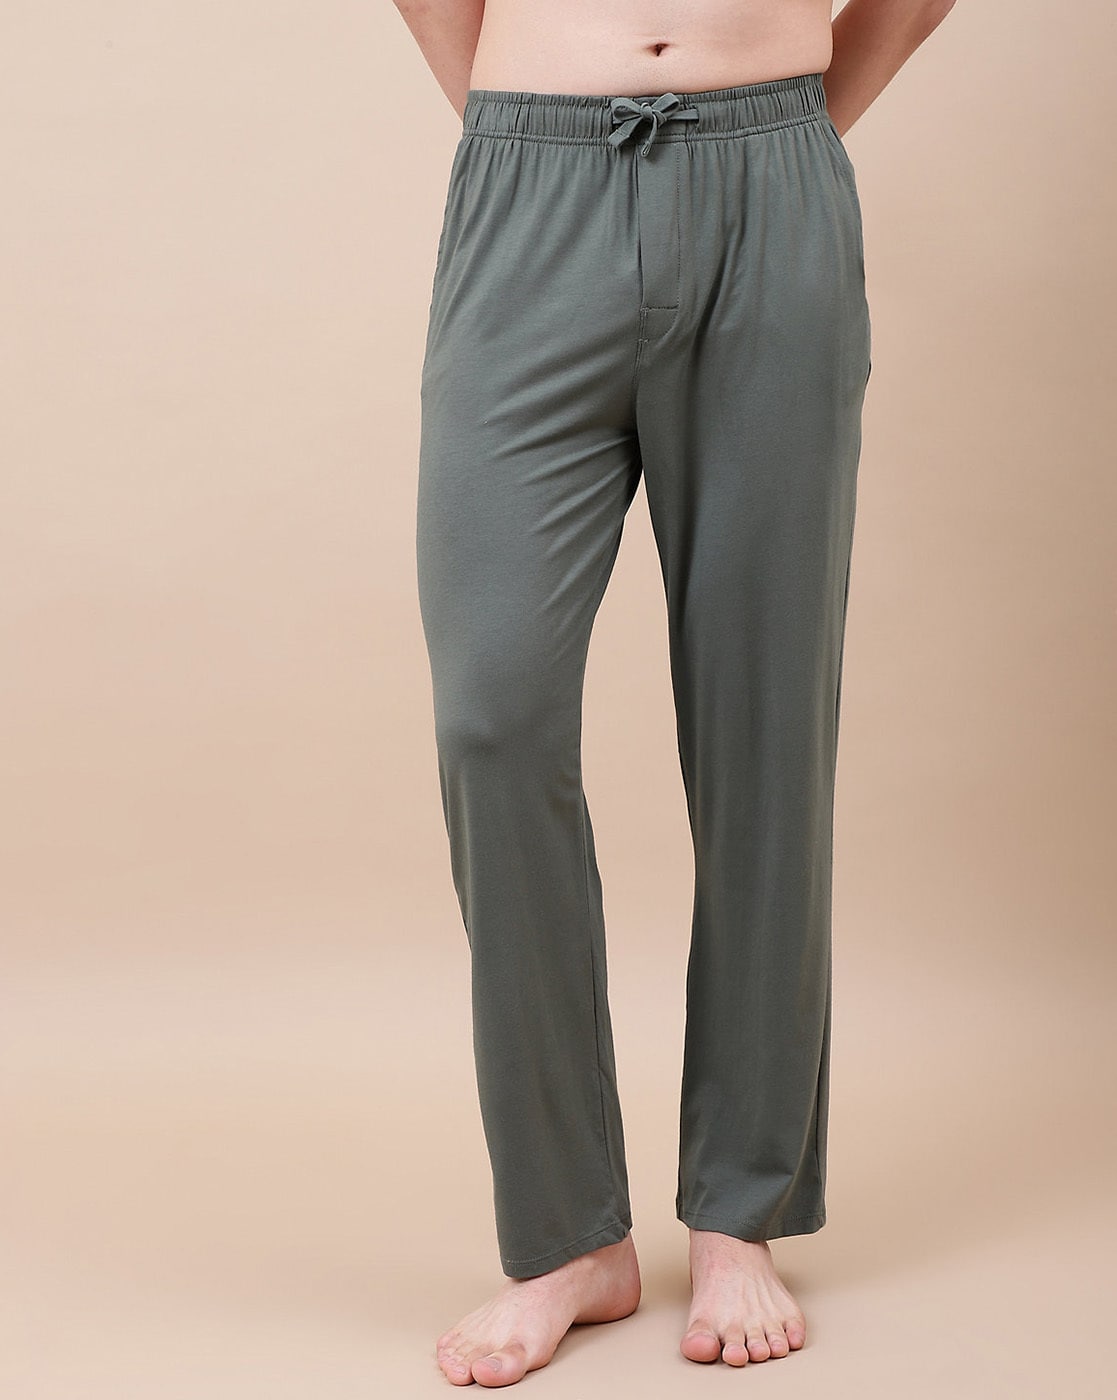 18 Pieces Cottonbell Men's Knitted Pajama Pants Size 3xl - Mens Pajamas -  at - alltimetrading.com